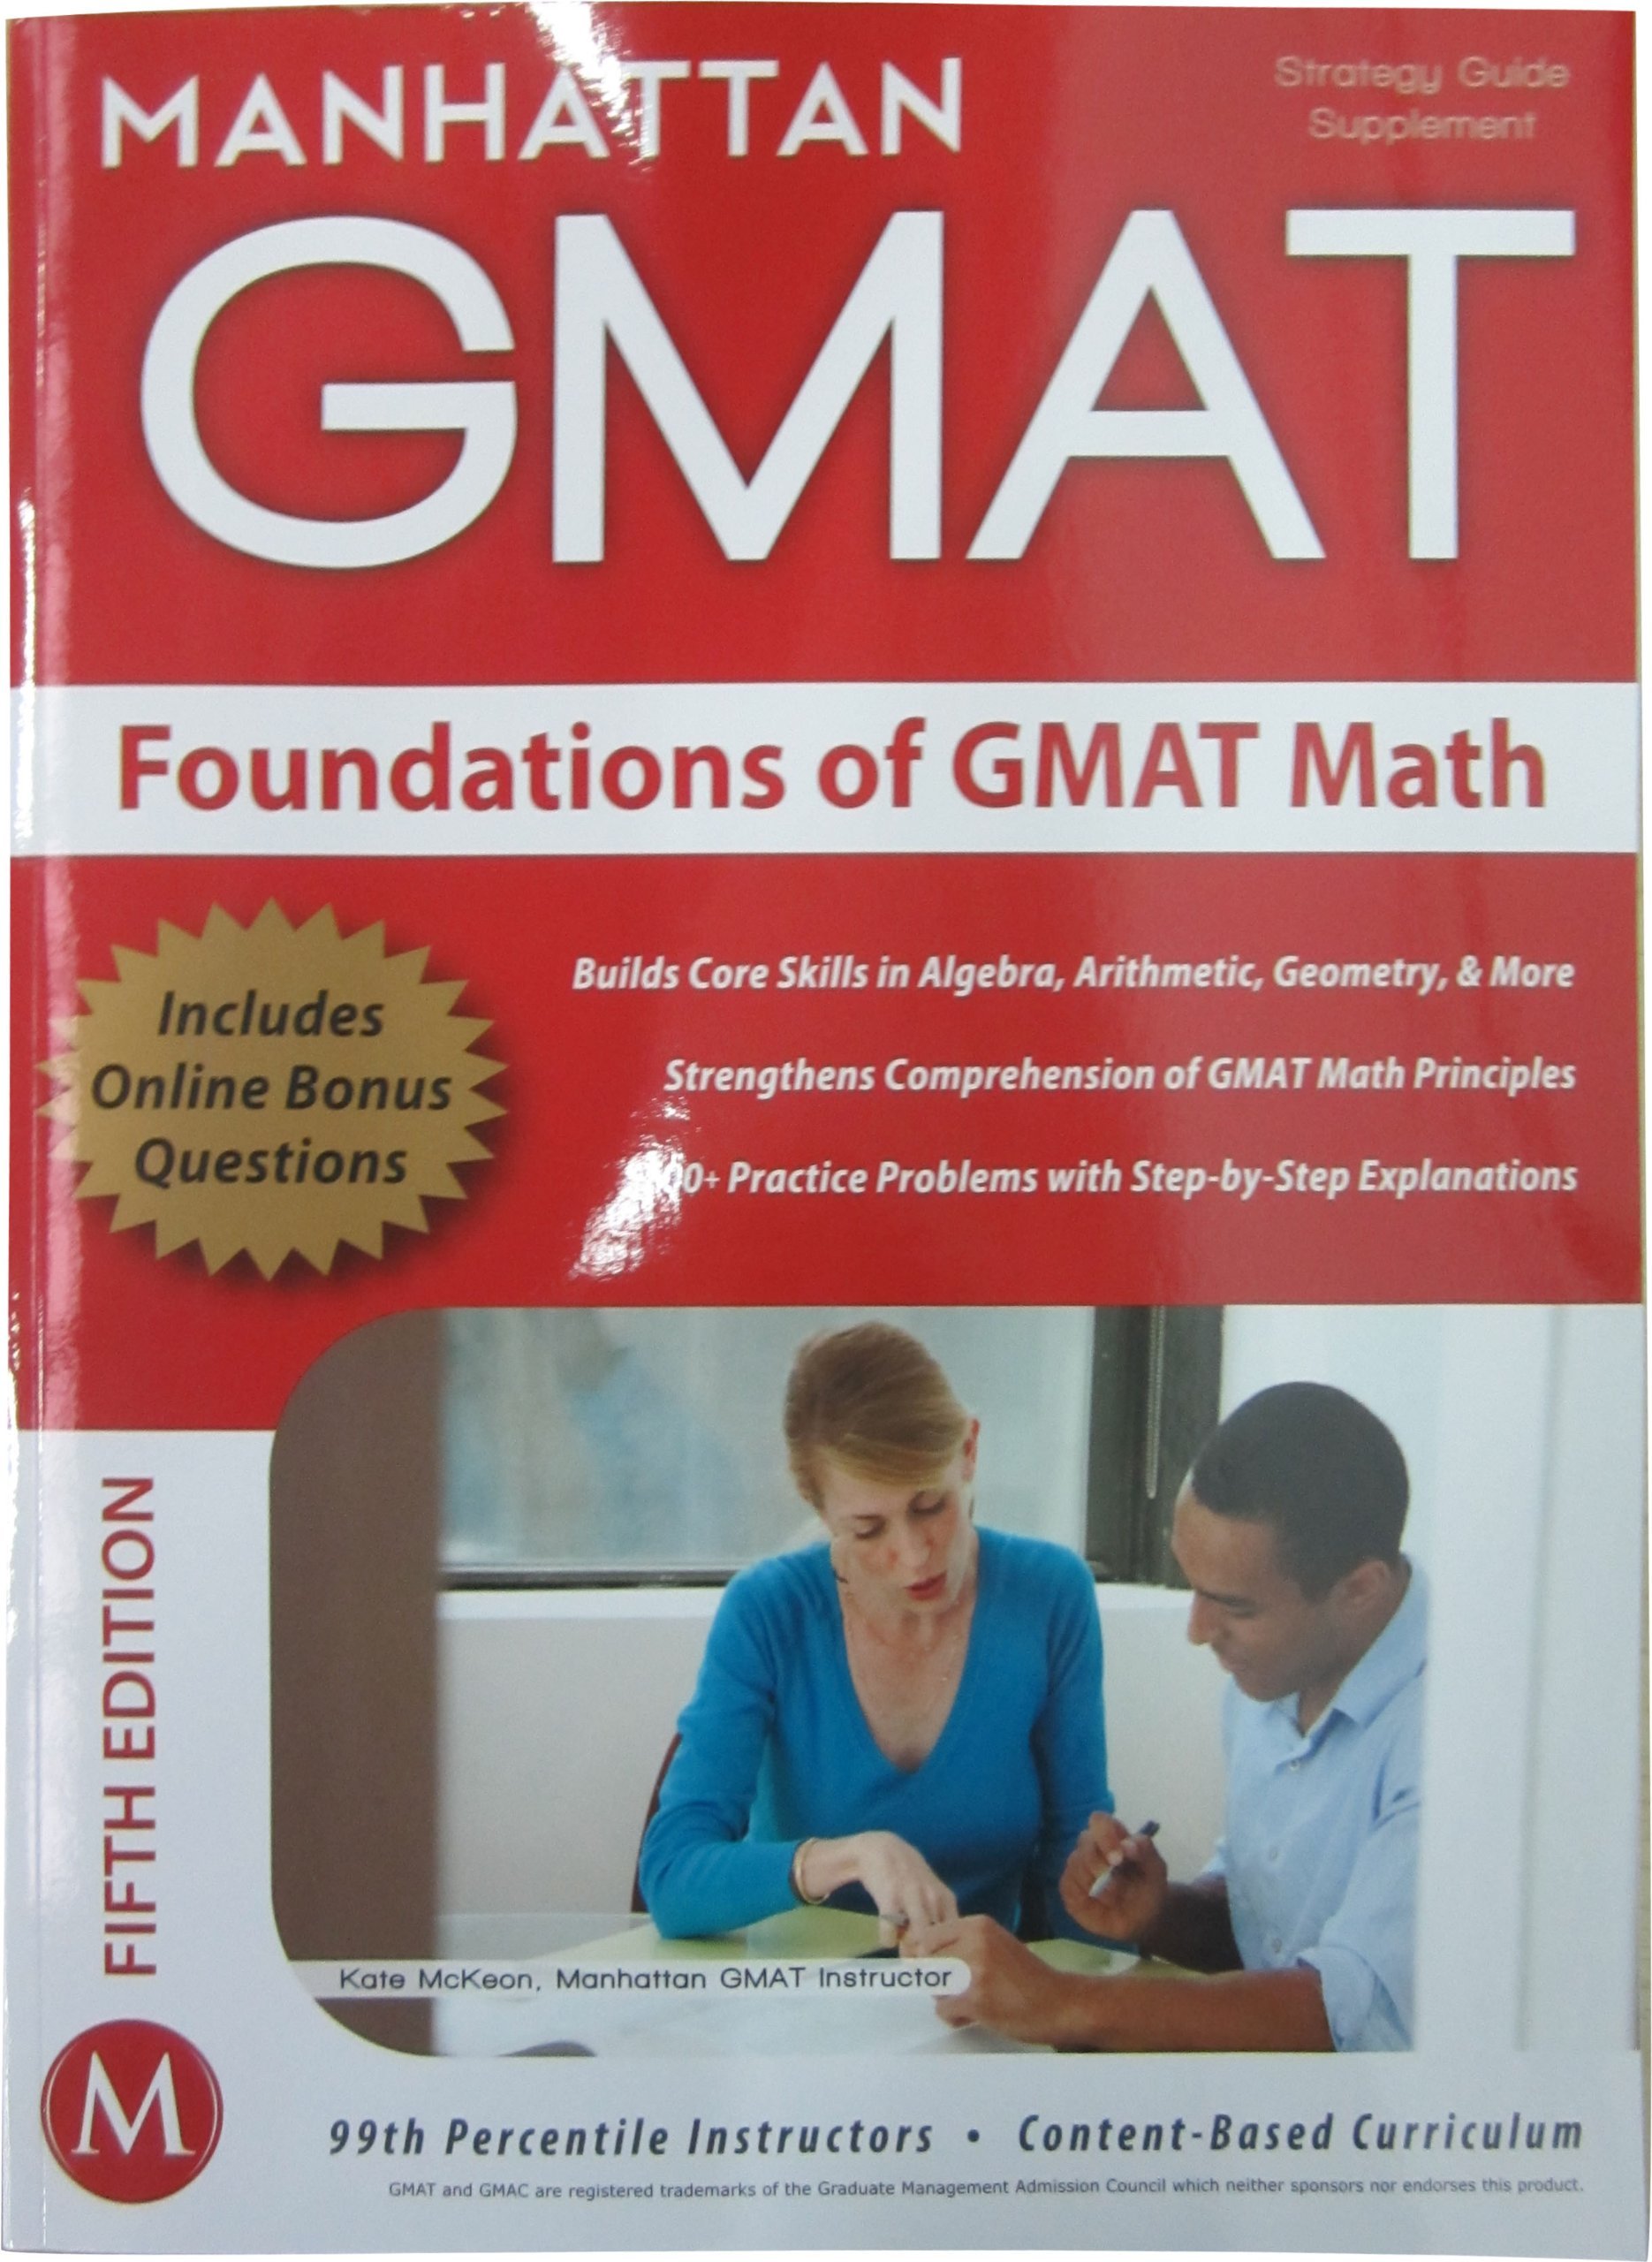 gmat foundation of gmat math.jpg